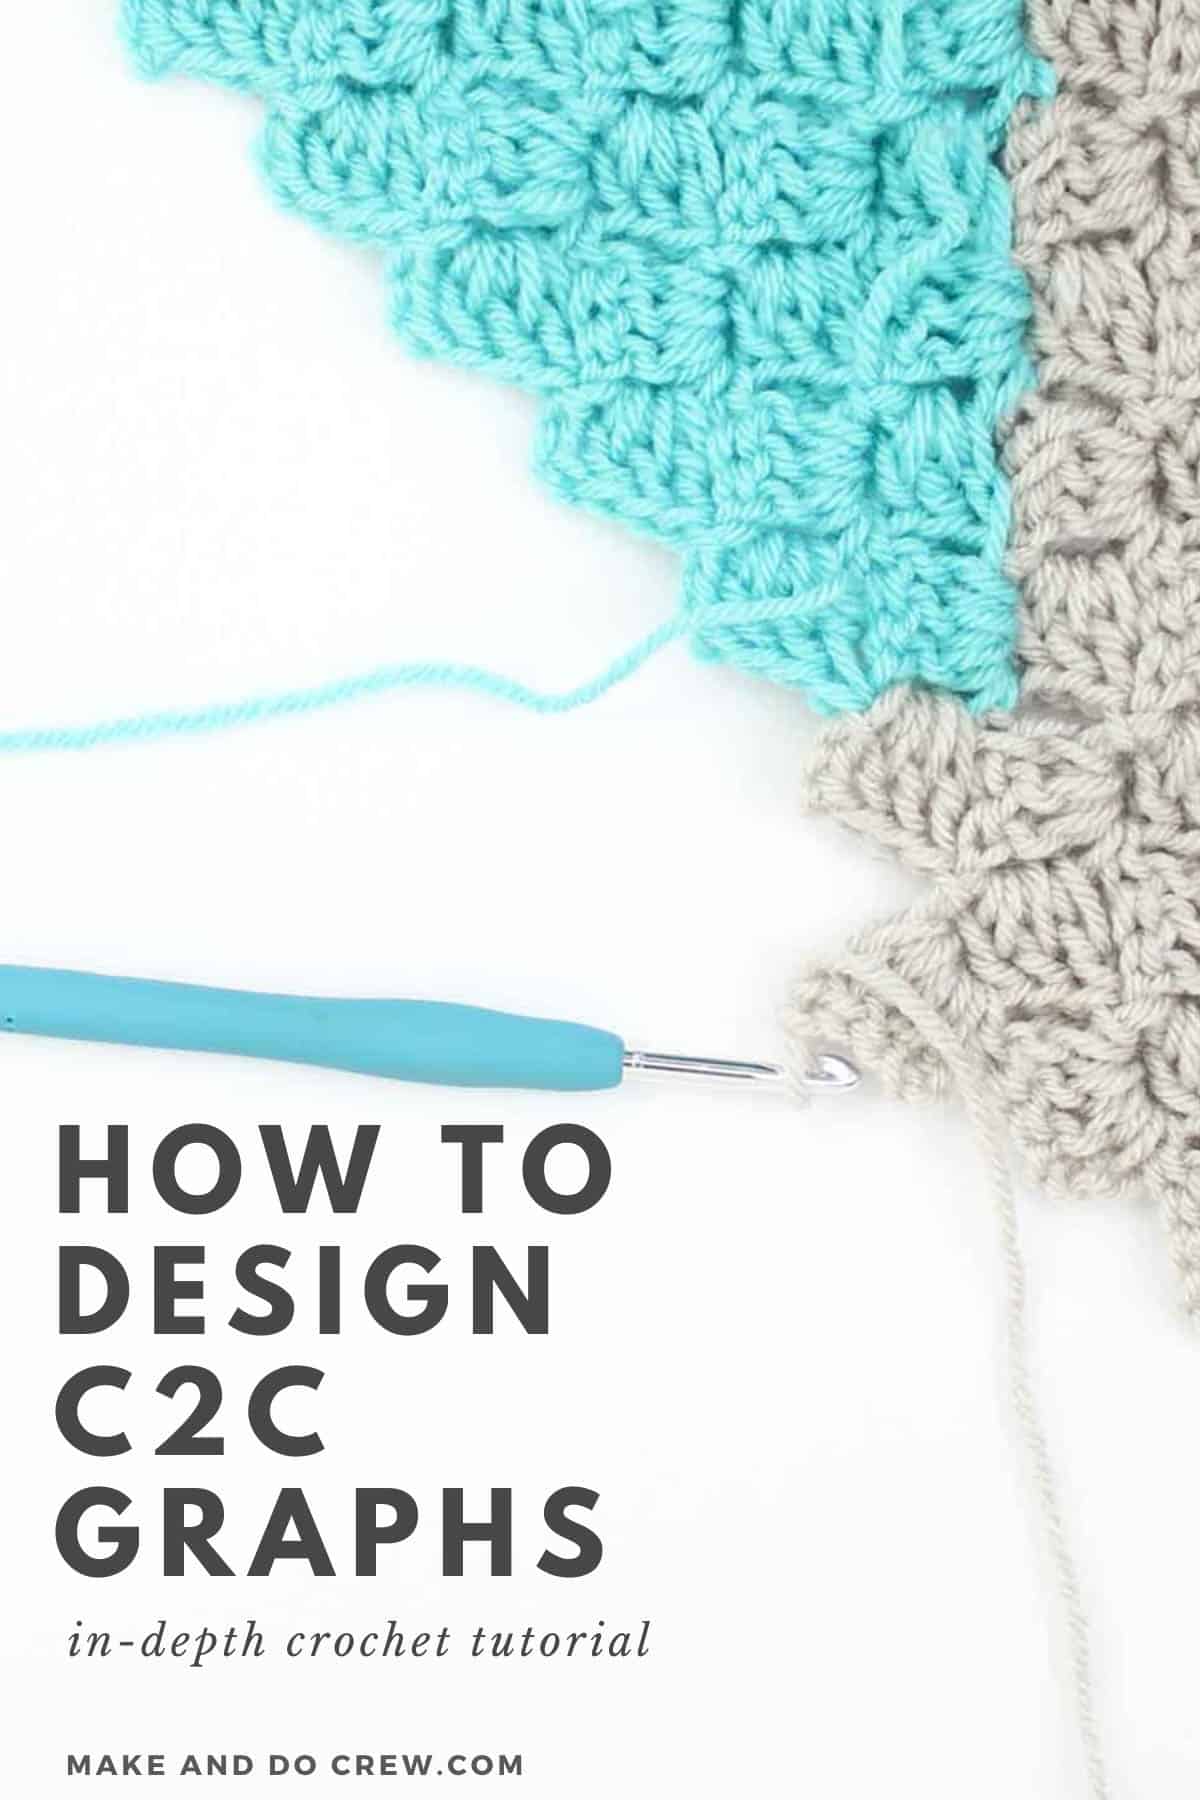 HONOR C2C CROCHET PATTERN Japanese Calligraphy Crochet Blanket Fiber Art Home Decor Graph Written and Color Block Instructions Included